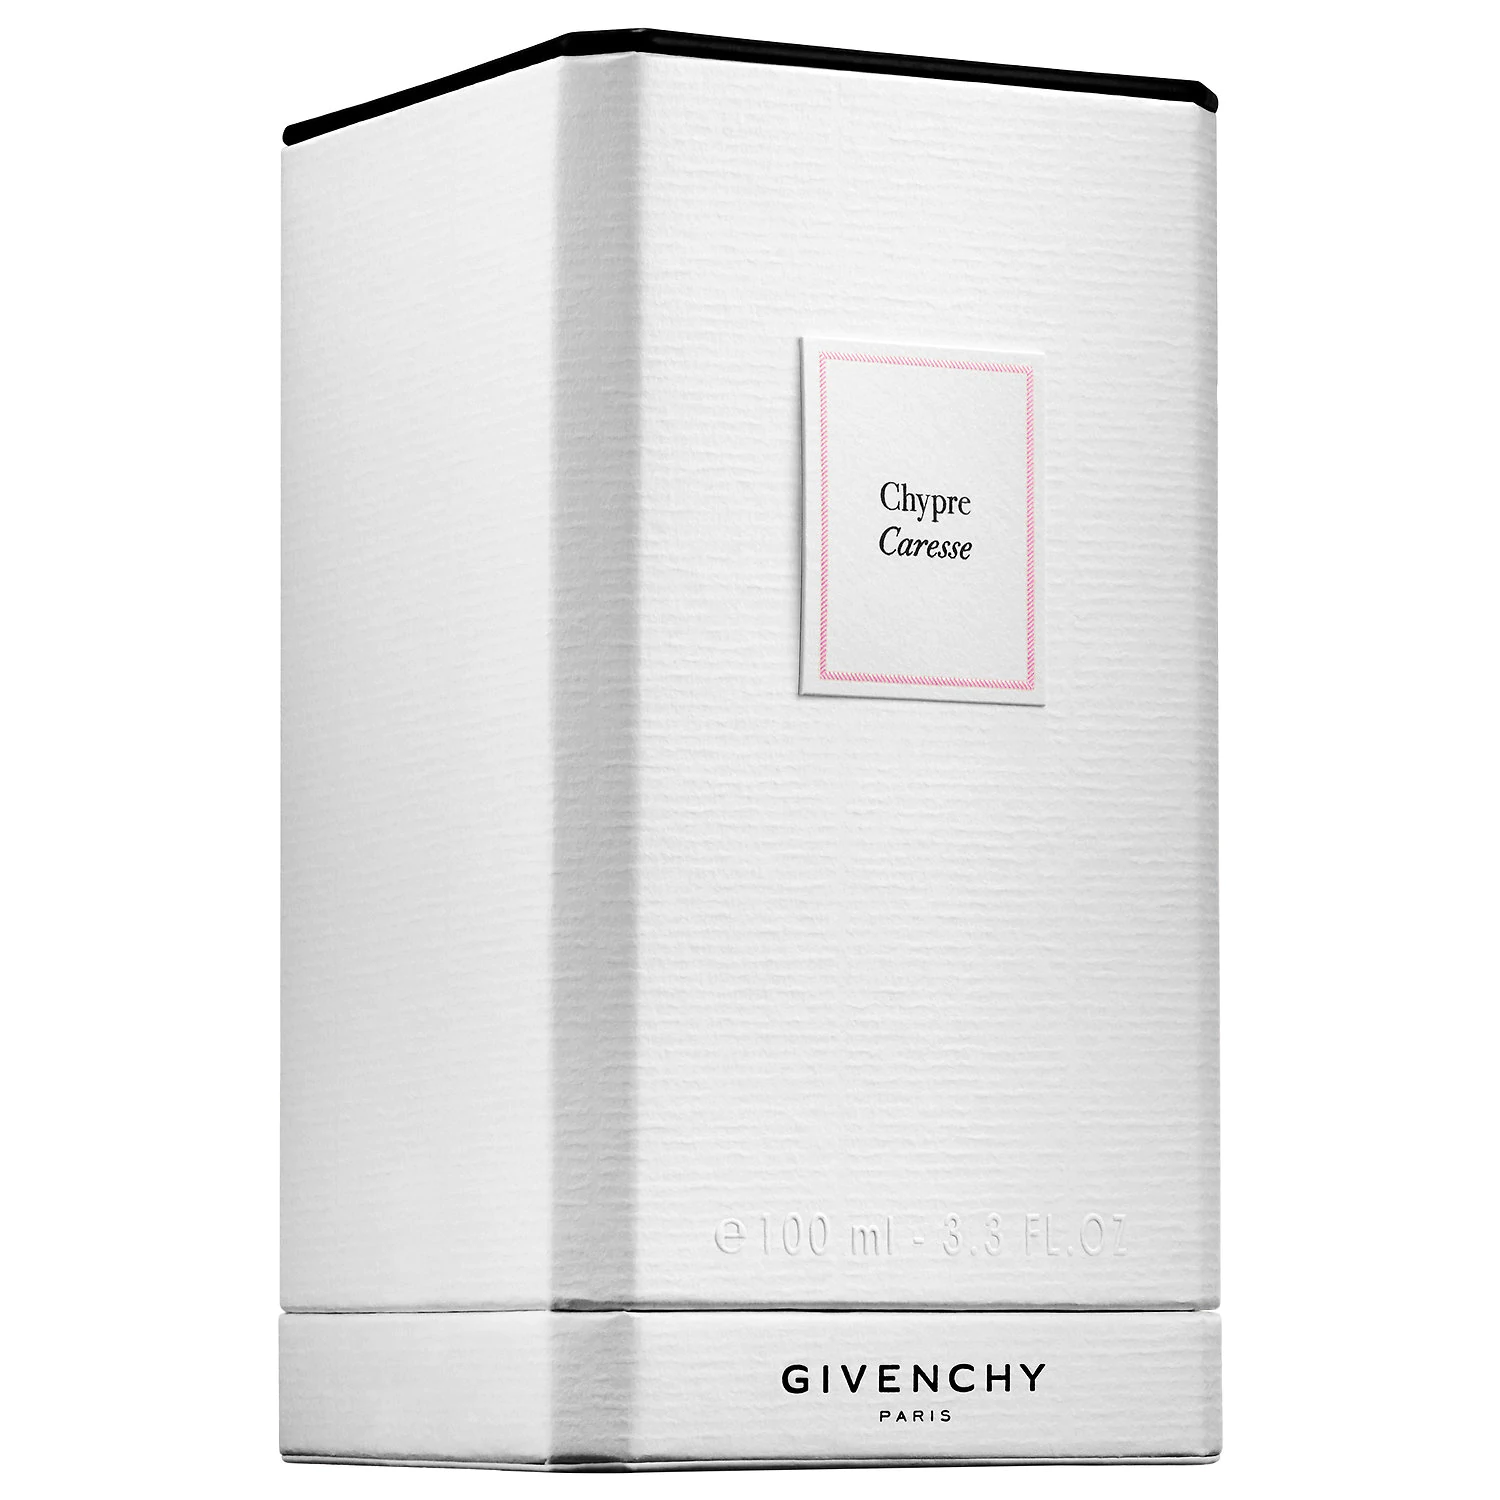 Givenchy cuir Blanc. Givenchy cuir Blanc 5 ml. Amber Givenchy. Дживанши Tiger Givenchy Ambre.